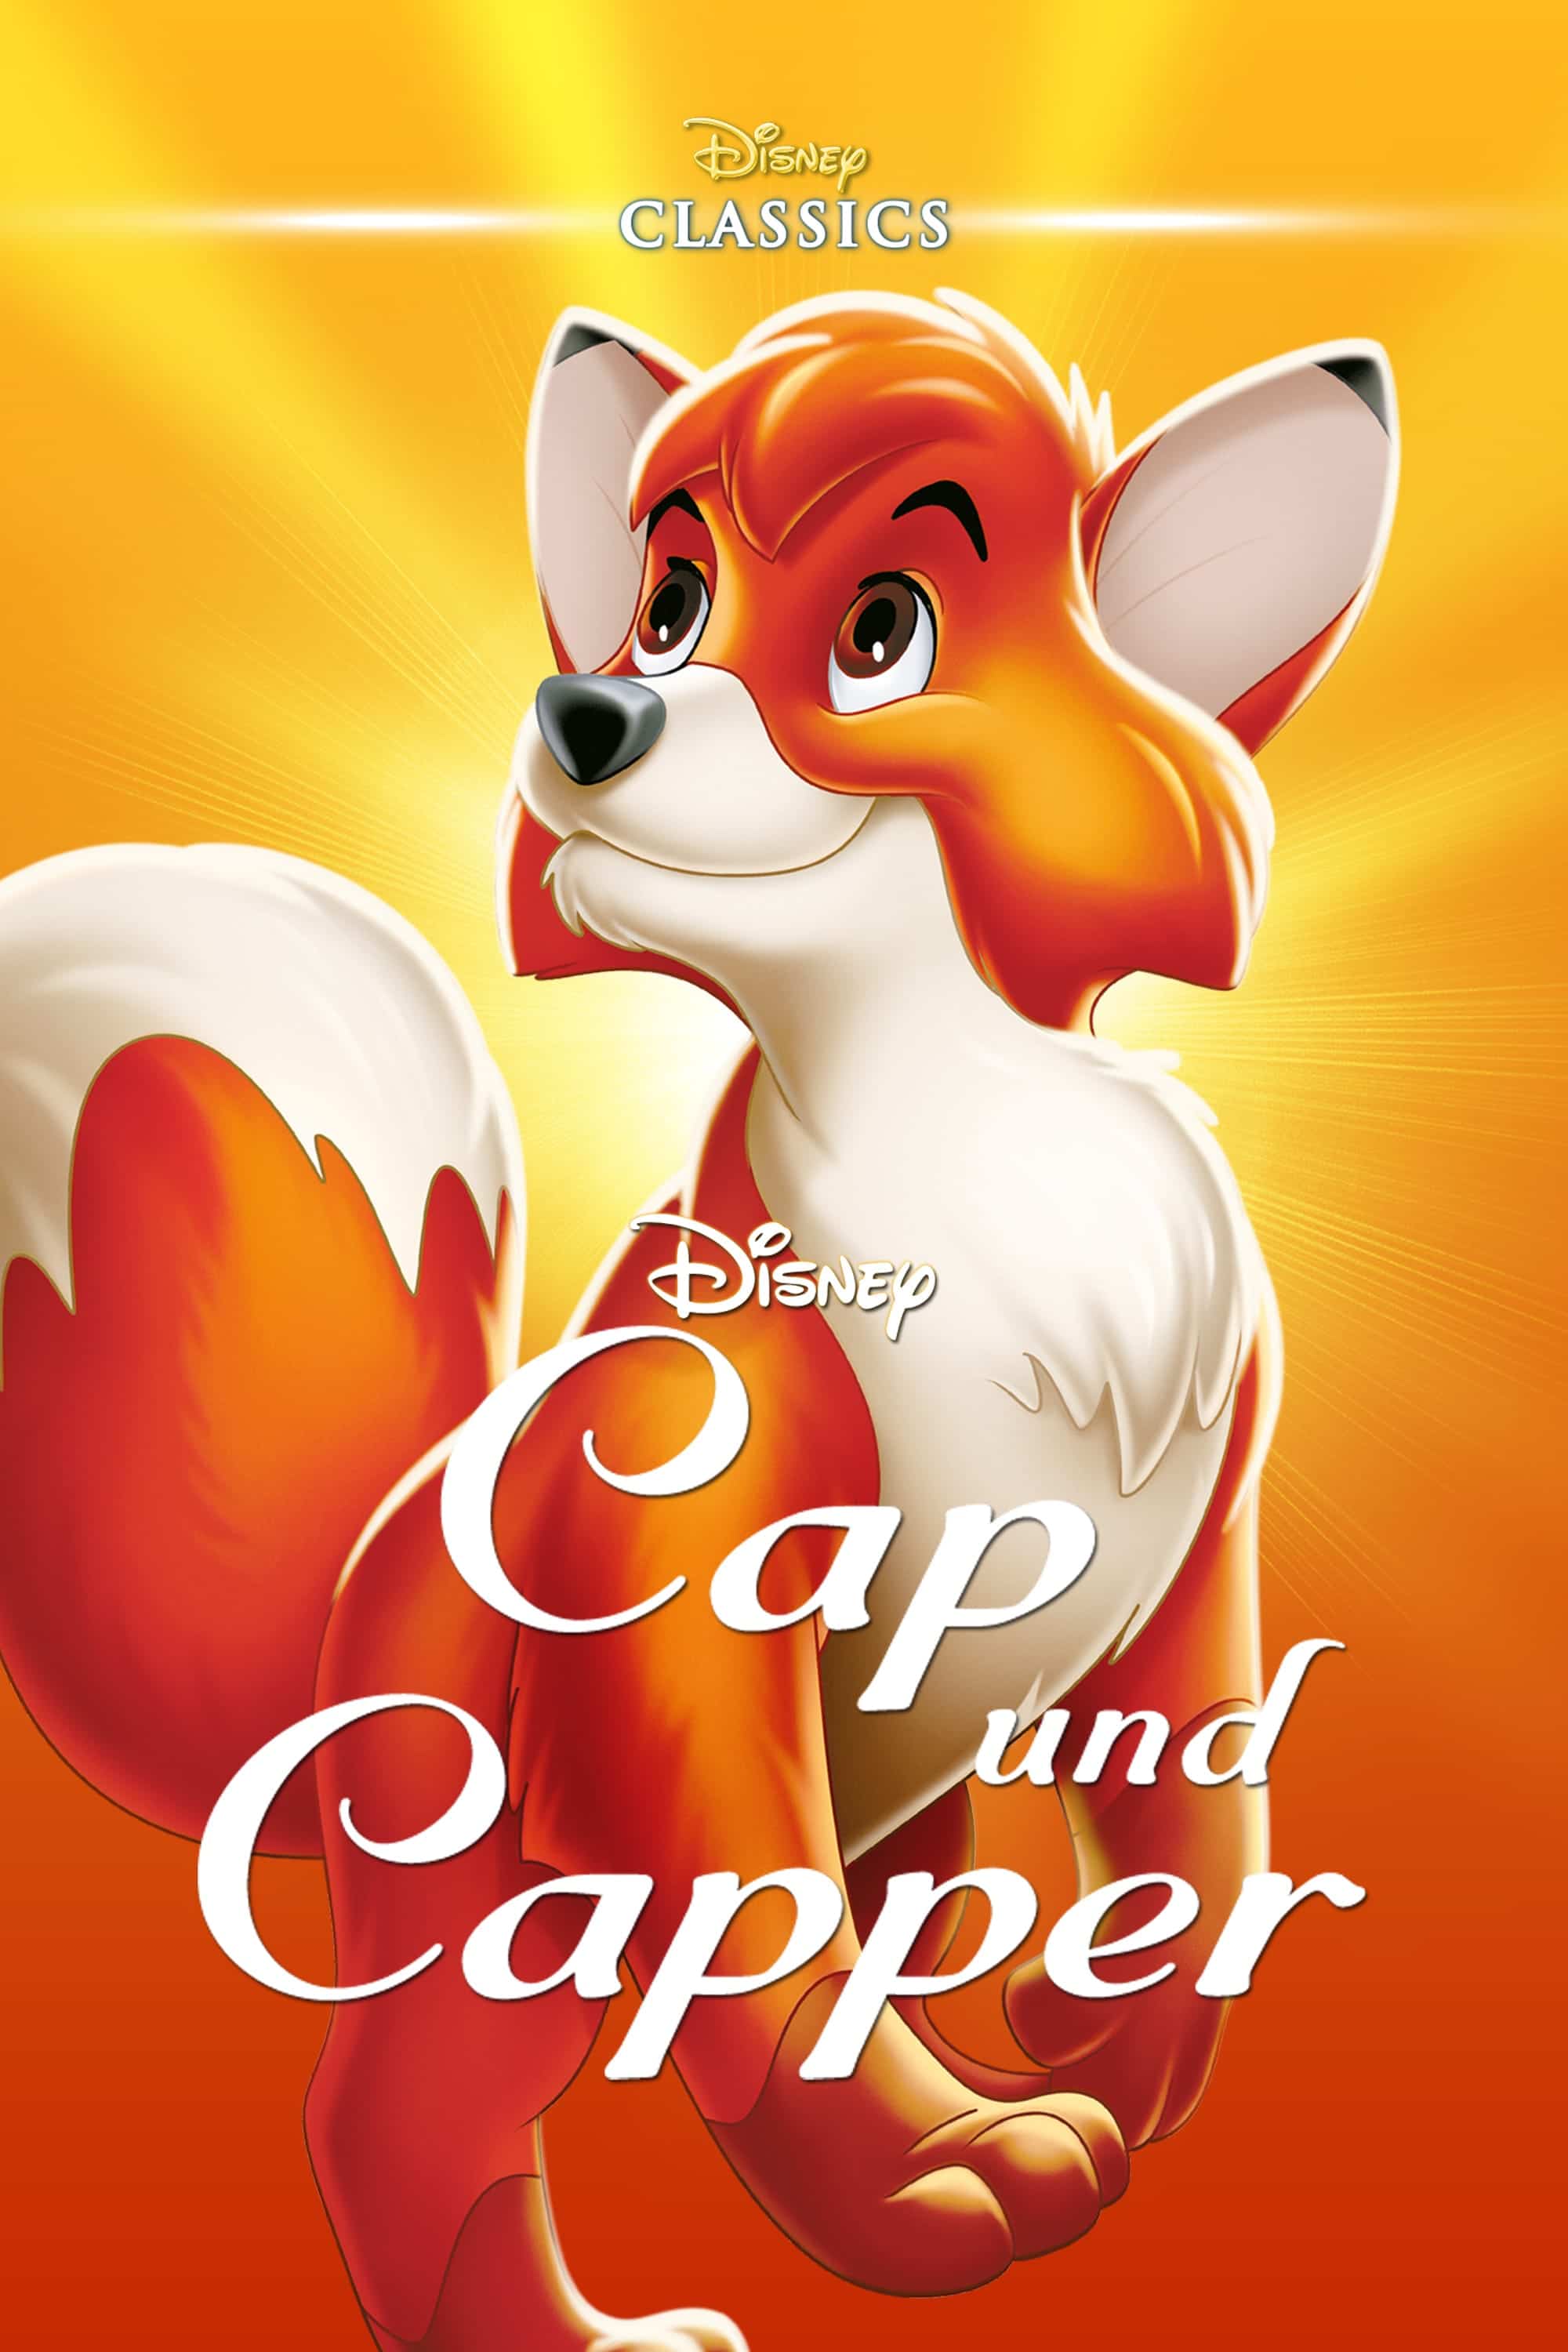 Plakat von "Cap und Capper"